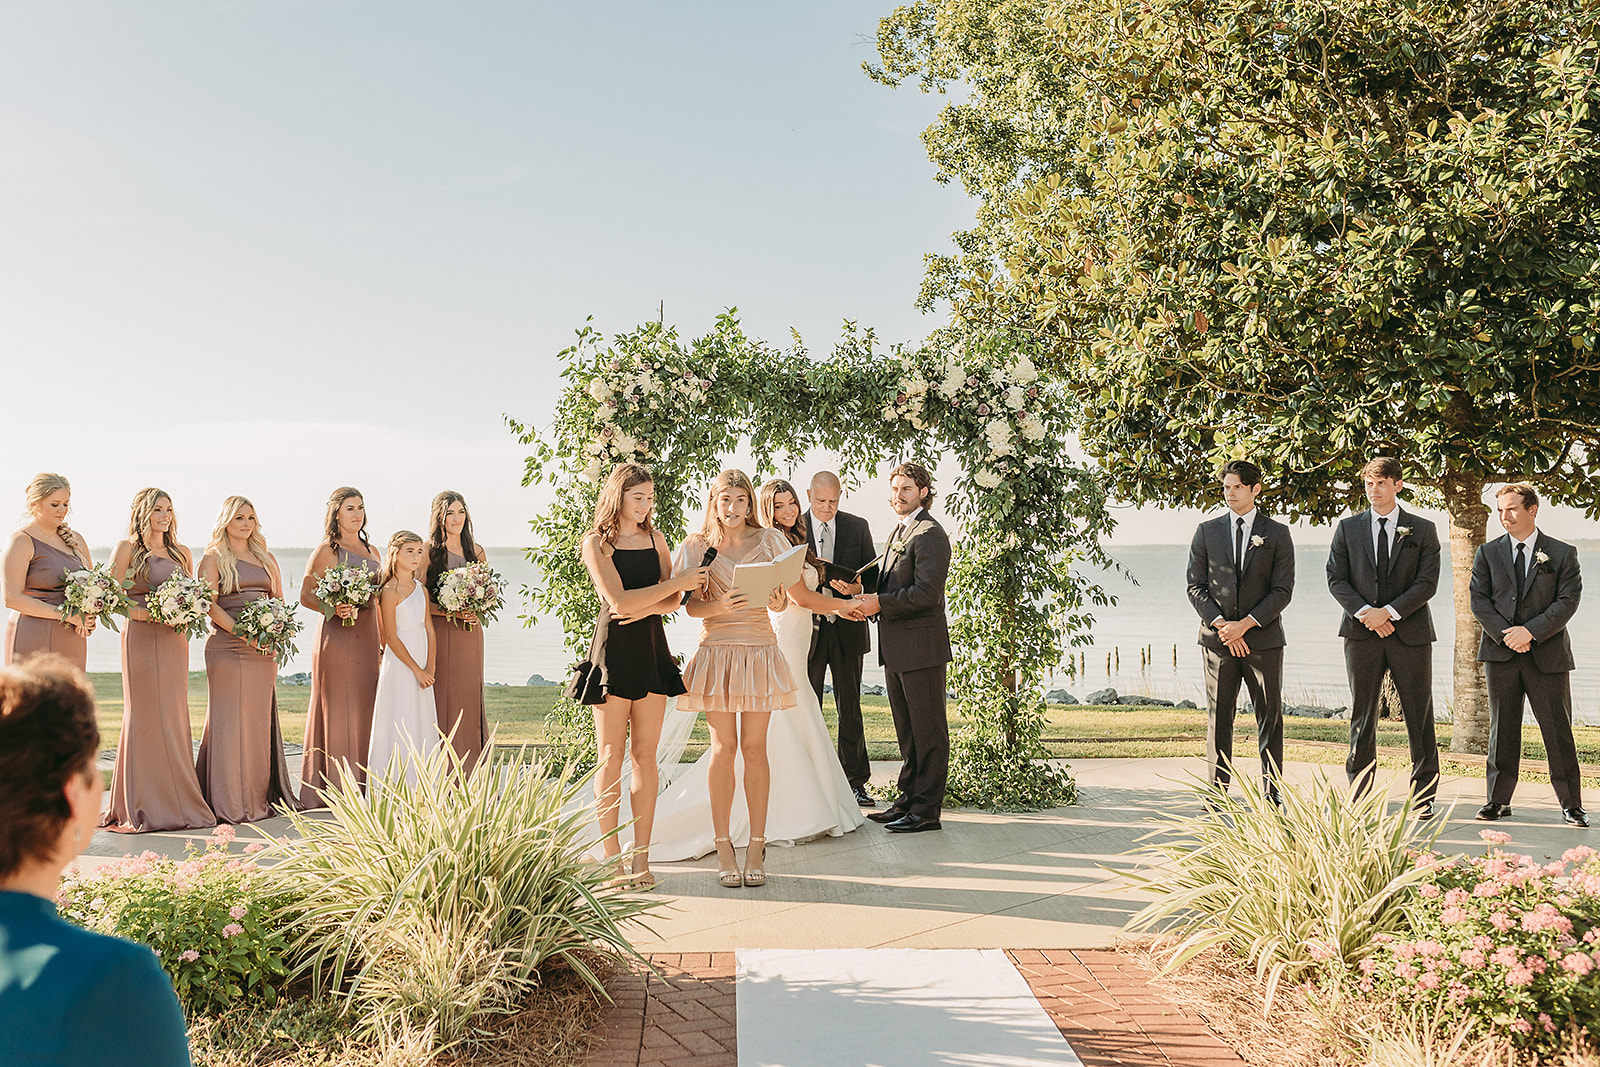 Christina and Jordan's wedding at the Coastal Arts Center of Orange Beach